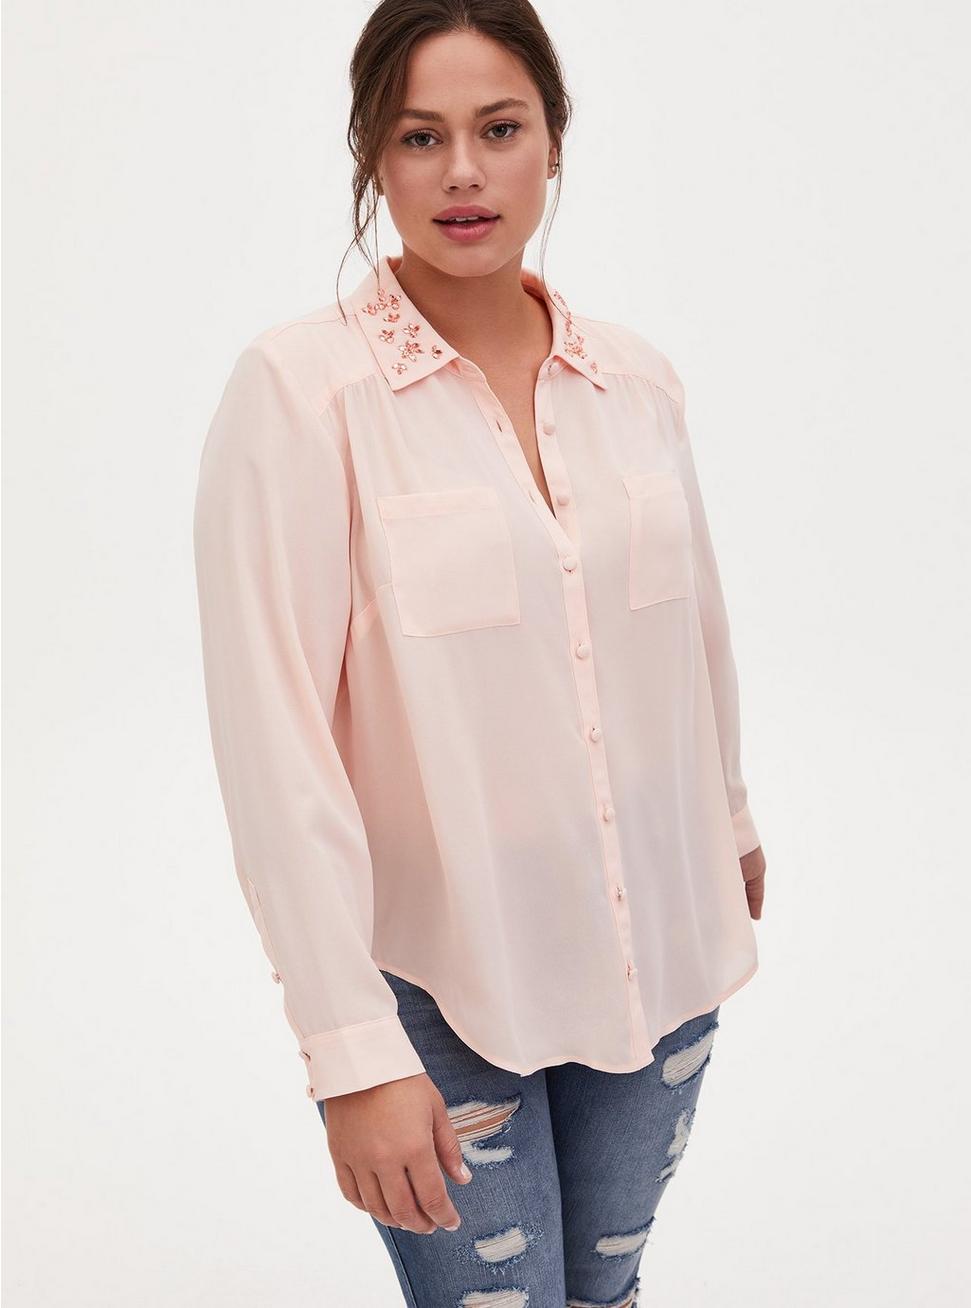 Madison - Light Pink Georgette Embellished Collar Button Front Blouse, PALE BLUSH, alternate